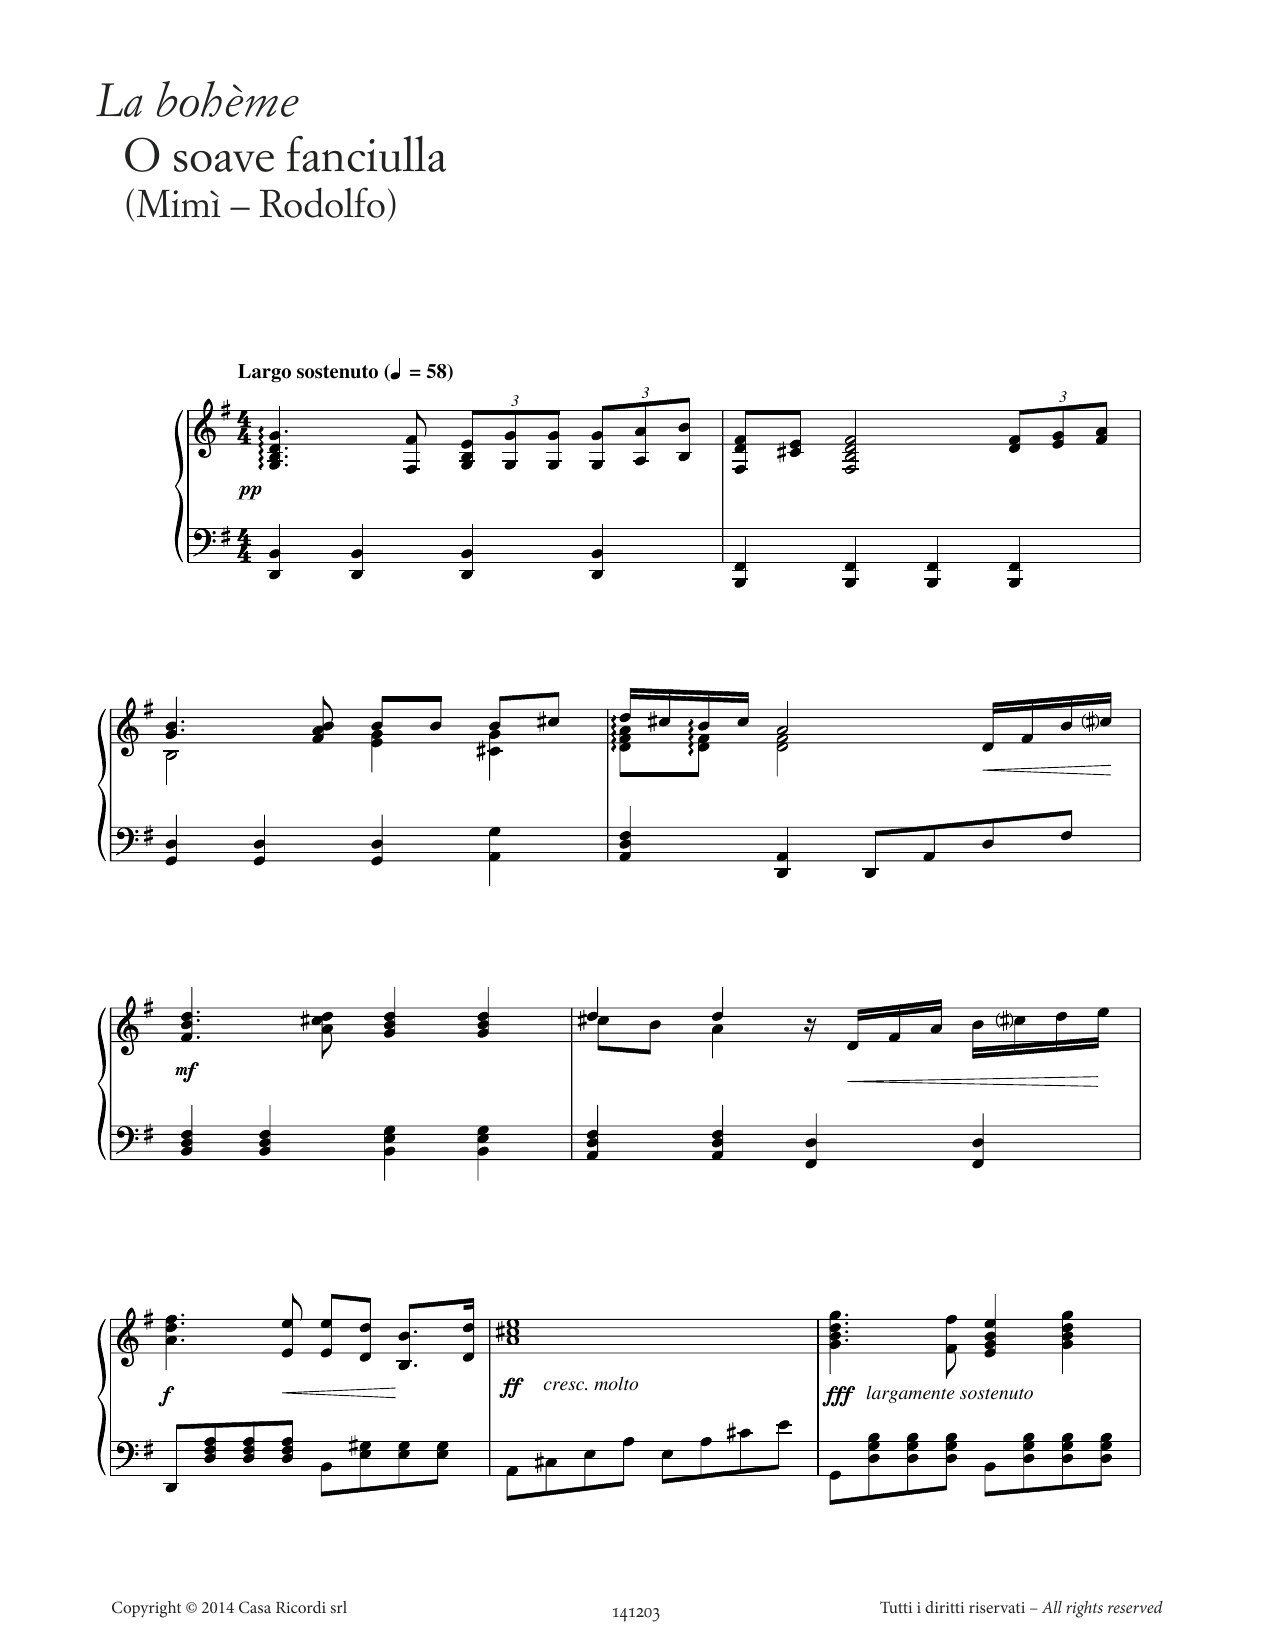 Giacomo Puccini O soave fanciulla (from La Bohème) sheet music notes and chords arranged for Piano Solo